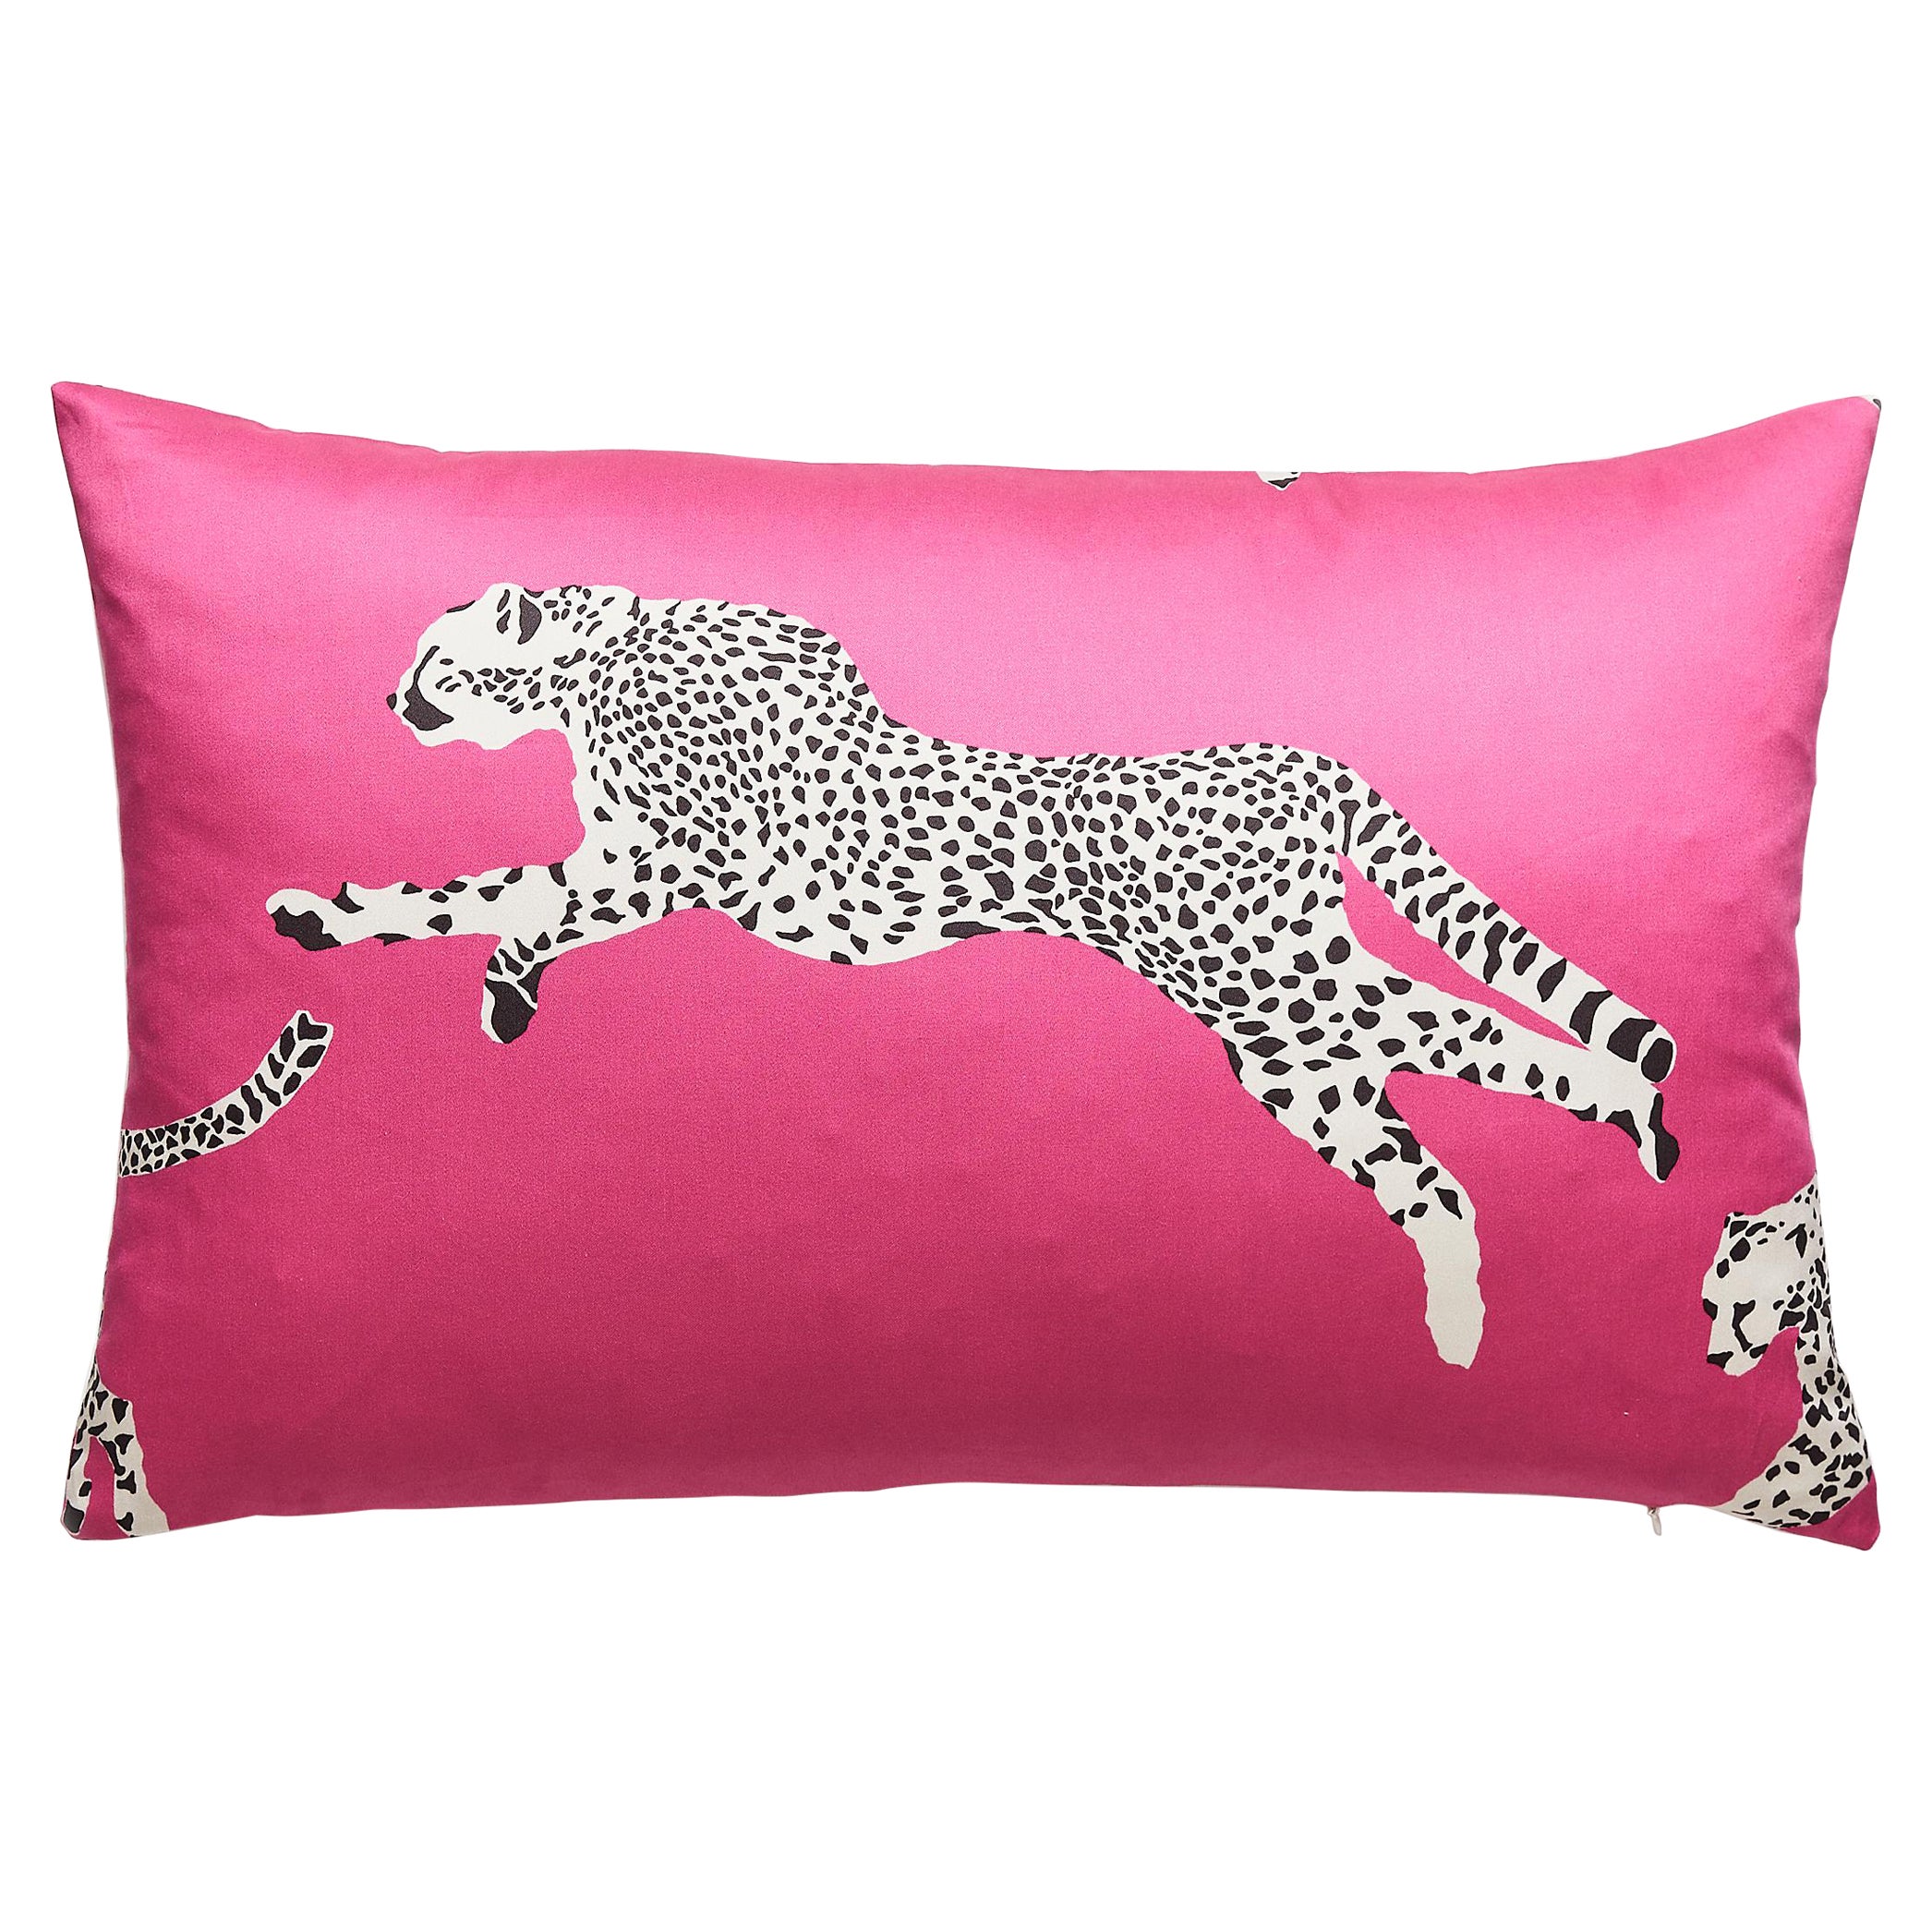 Leaping Cheetah Lumbar Pillow For Sale